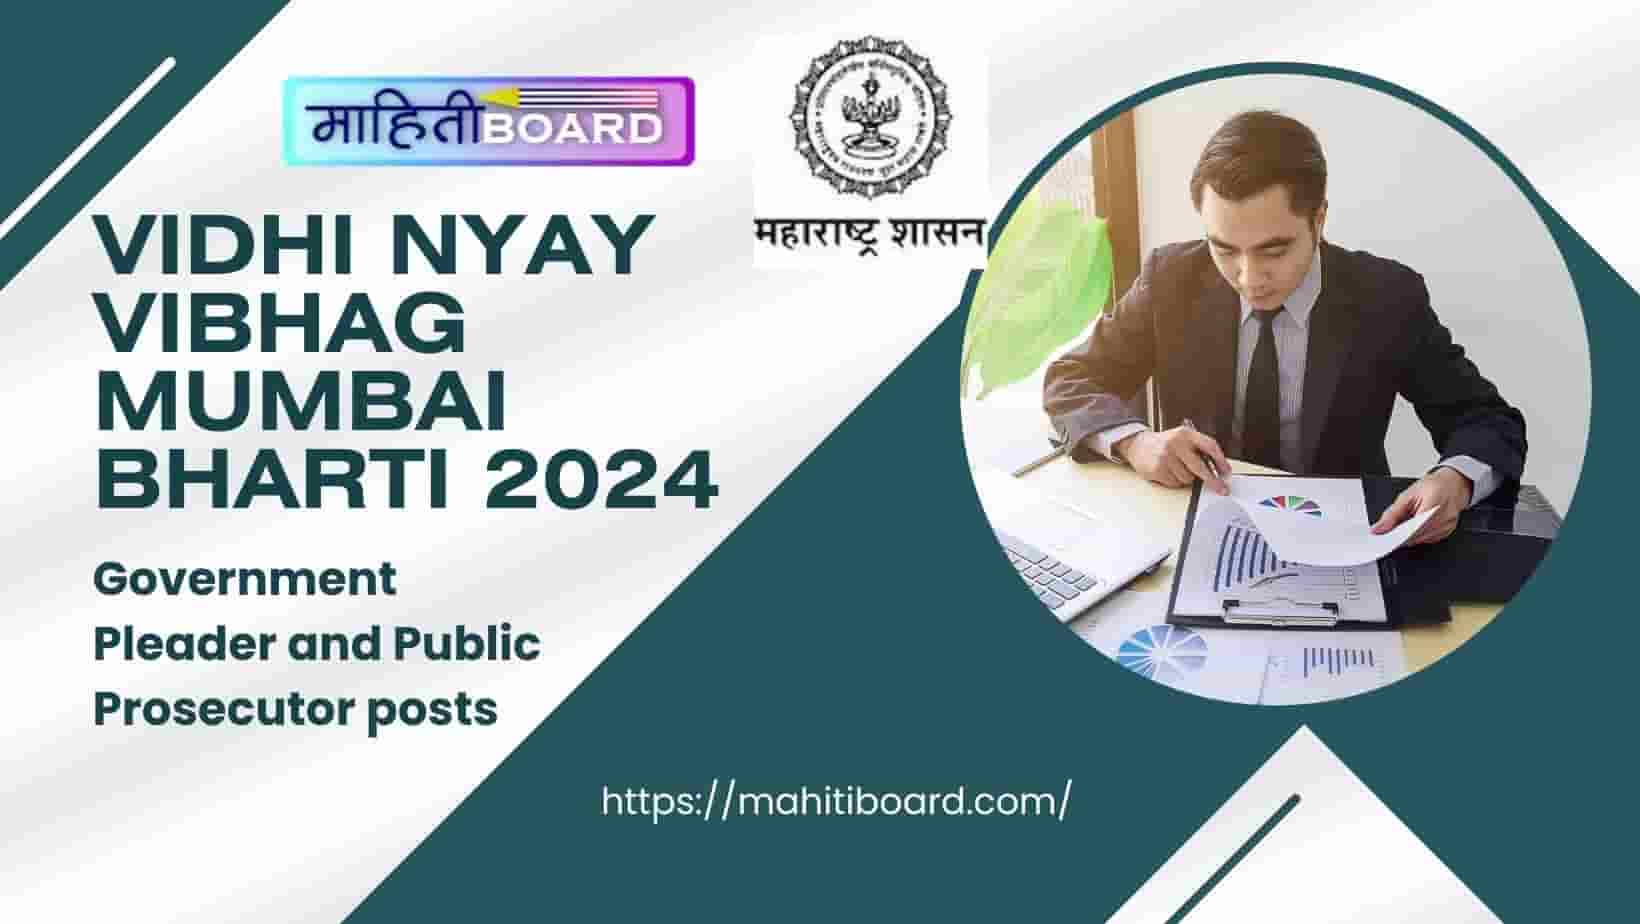 Vidhi Nyay Vibhag Mumbai Bharti 2024